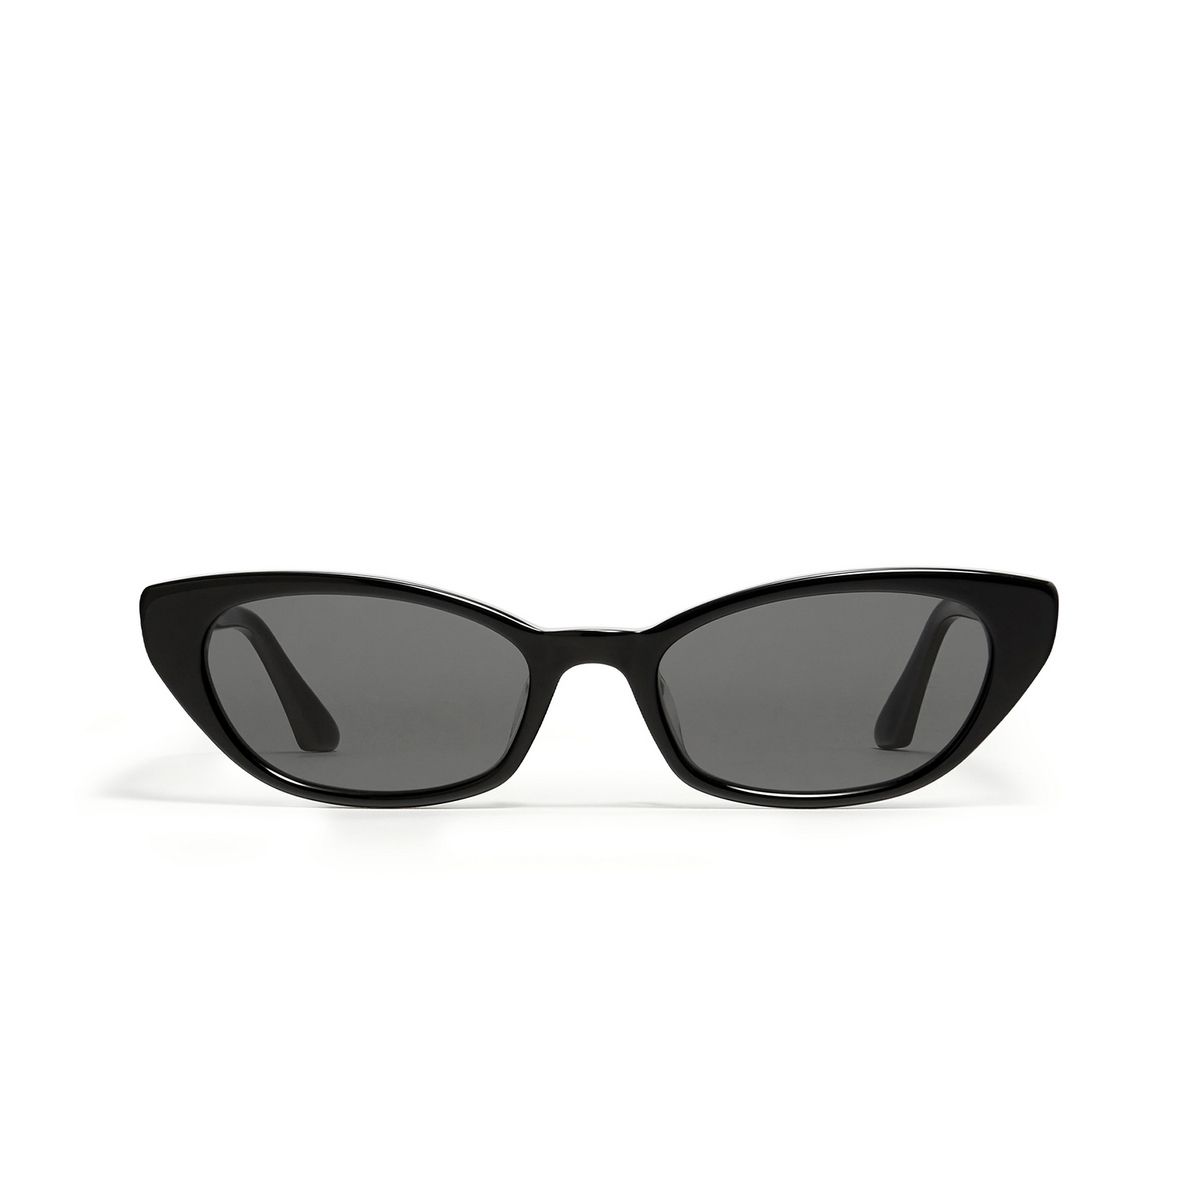 Gentle Monster PESH Sunglasses 01 Black - front view